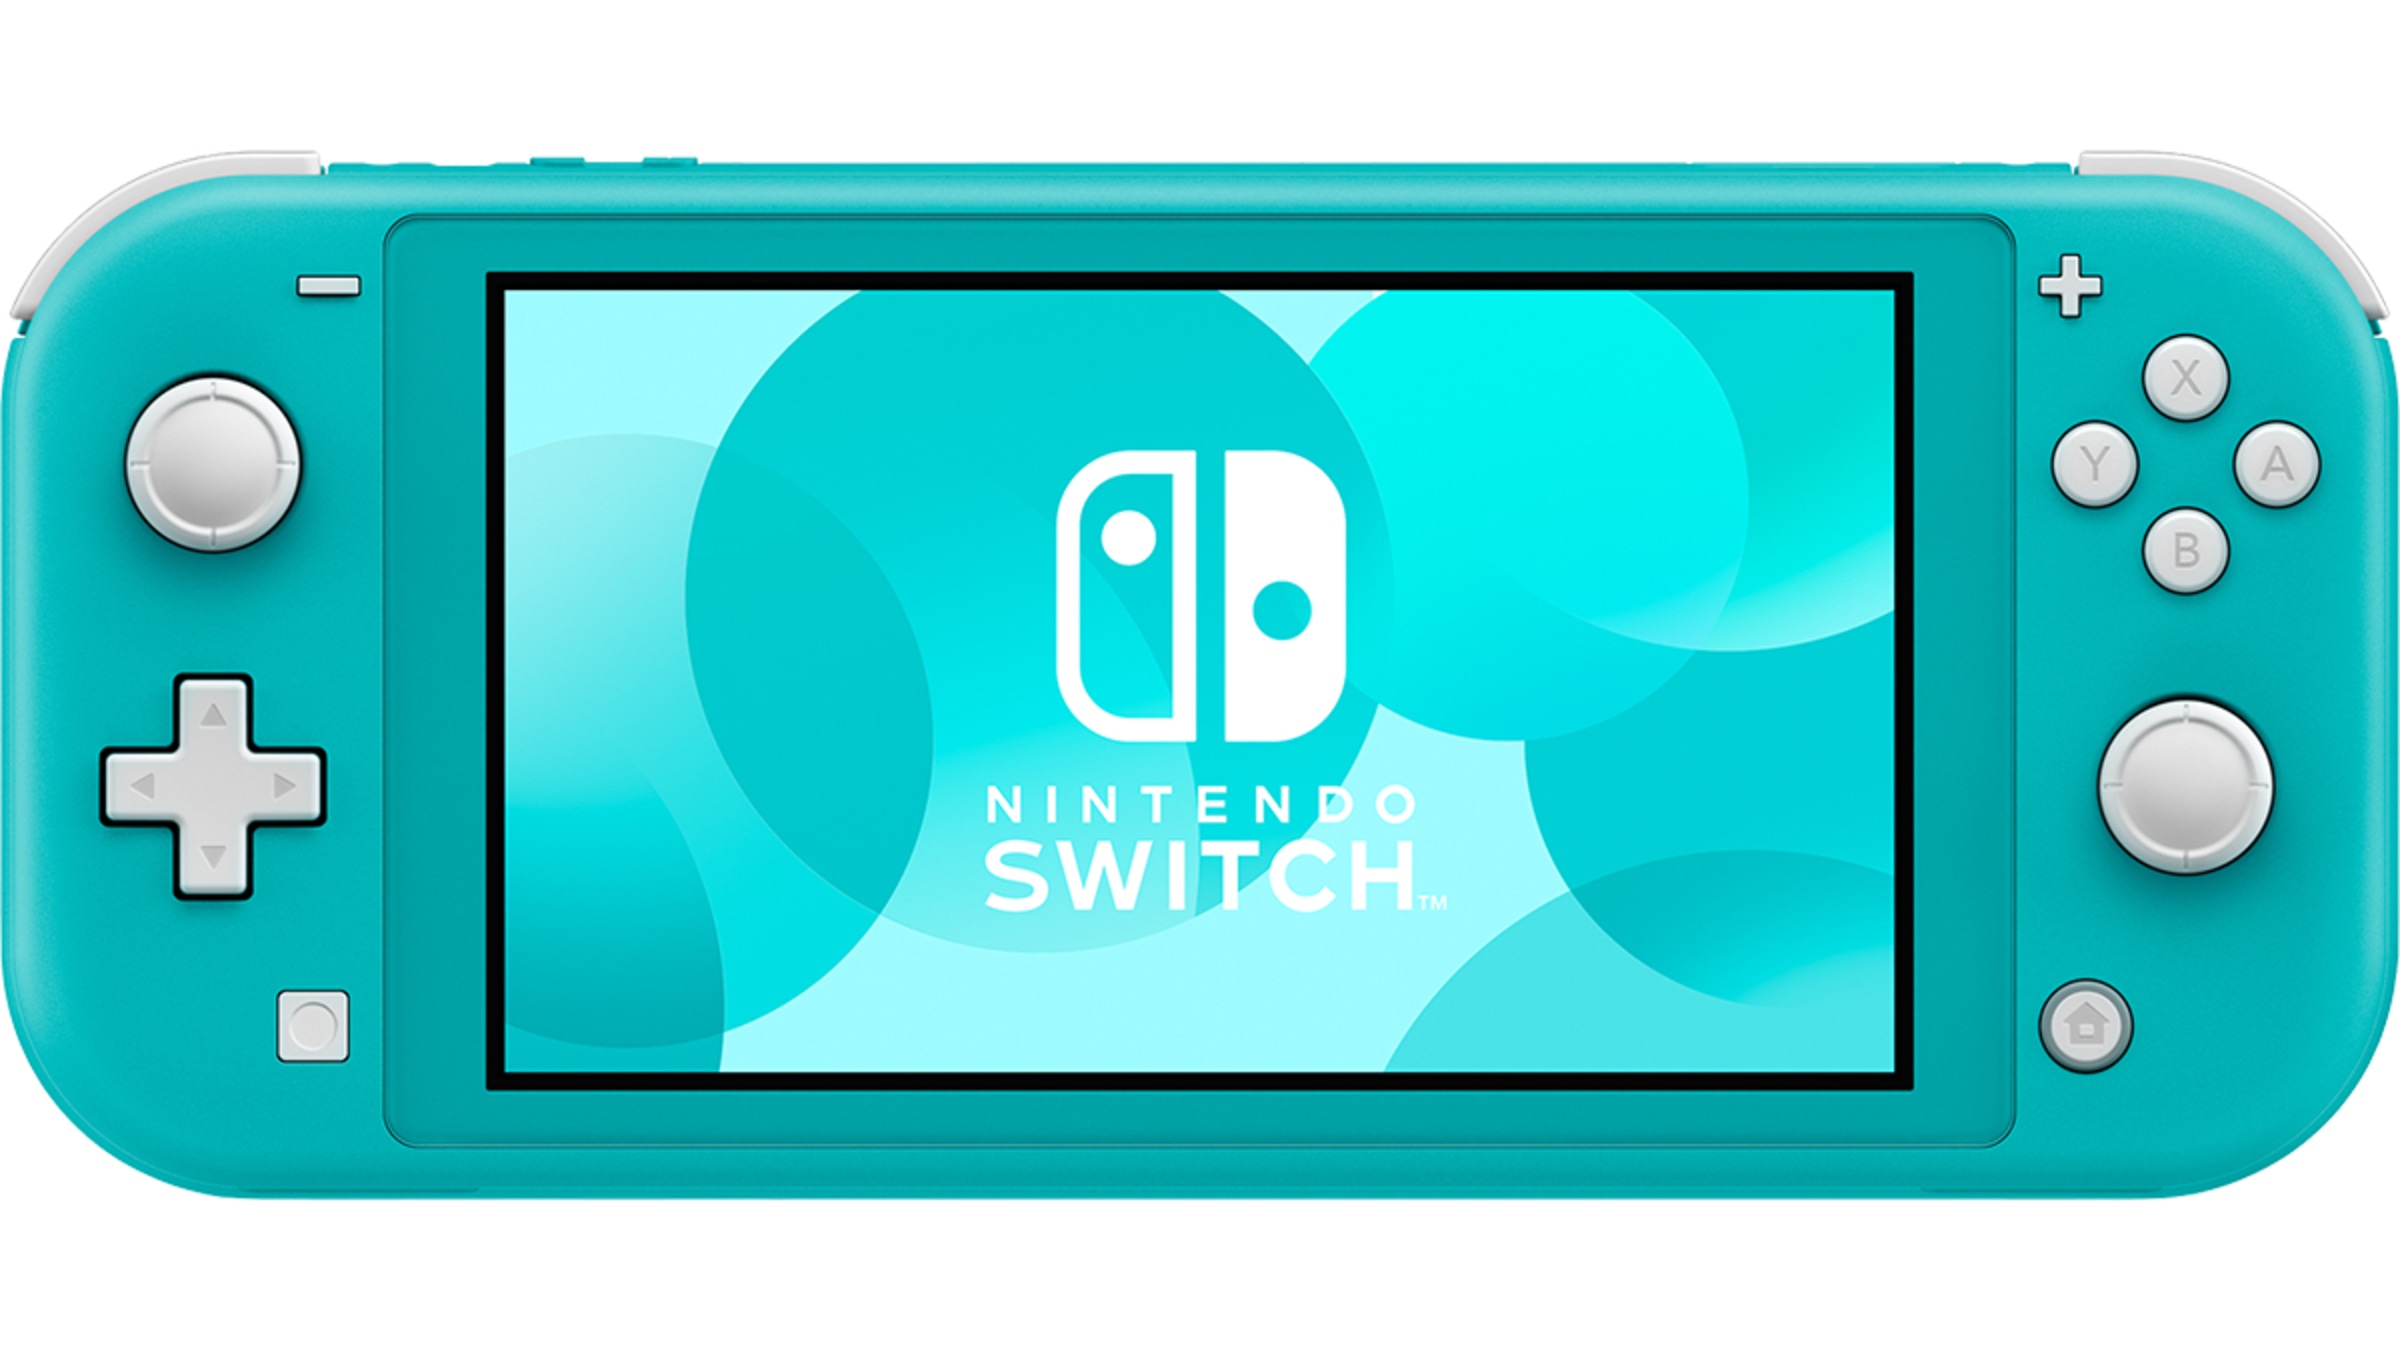 Nintendo Switch Lite ターコイズ | myglobaltax.com